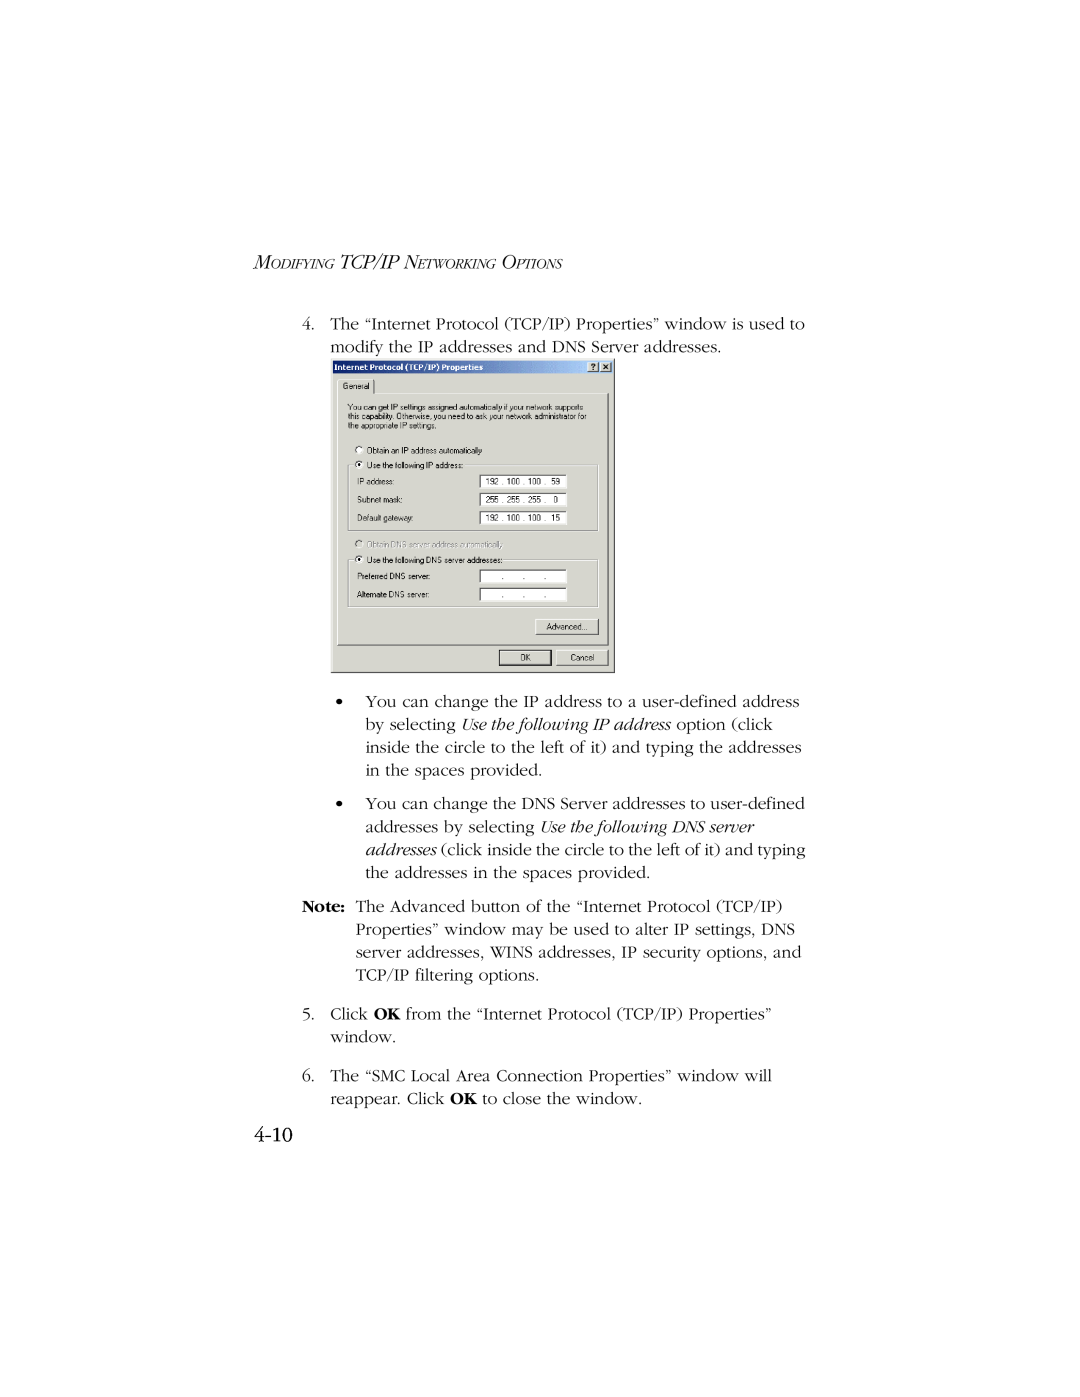 SMC Networks SMC7003-USB manual 4-10, Click OK from the “Internet Protocol TCP/IP Properties” window 